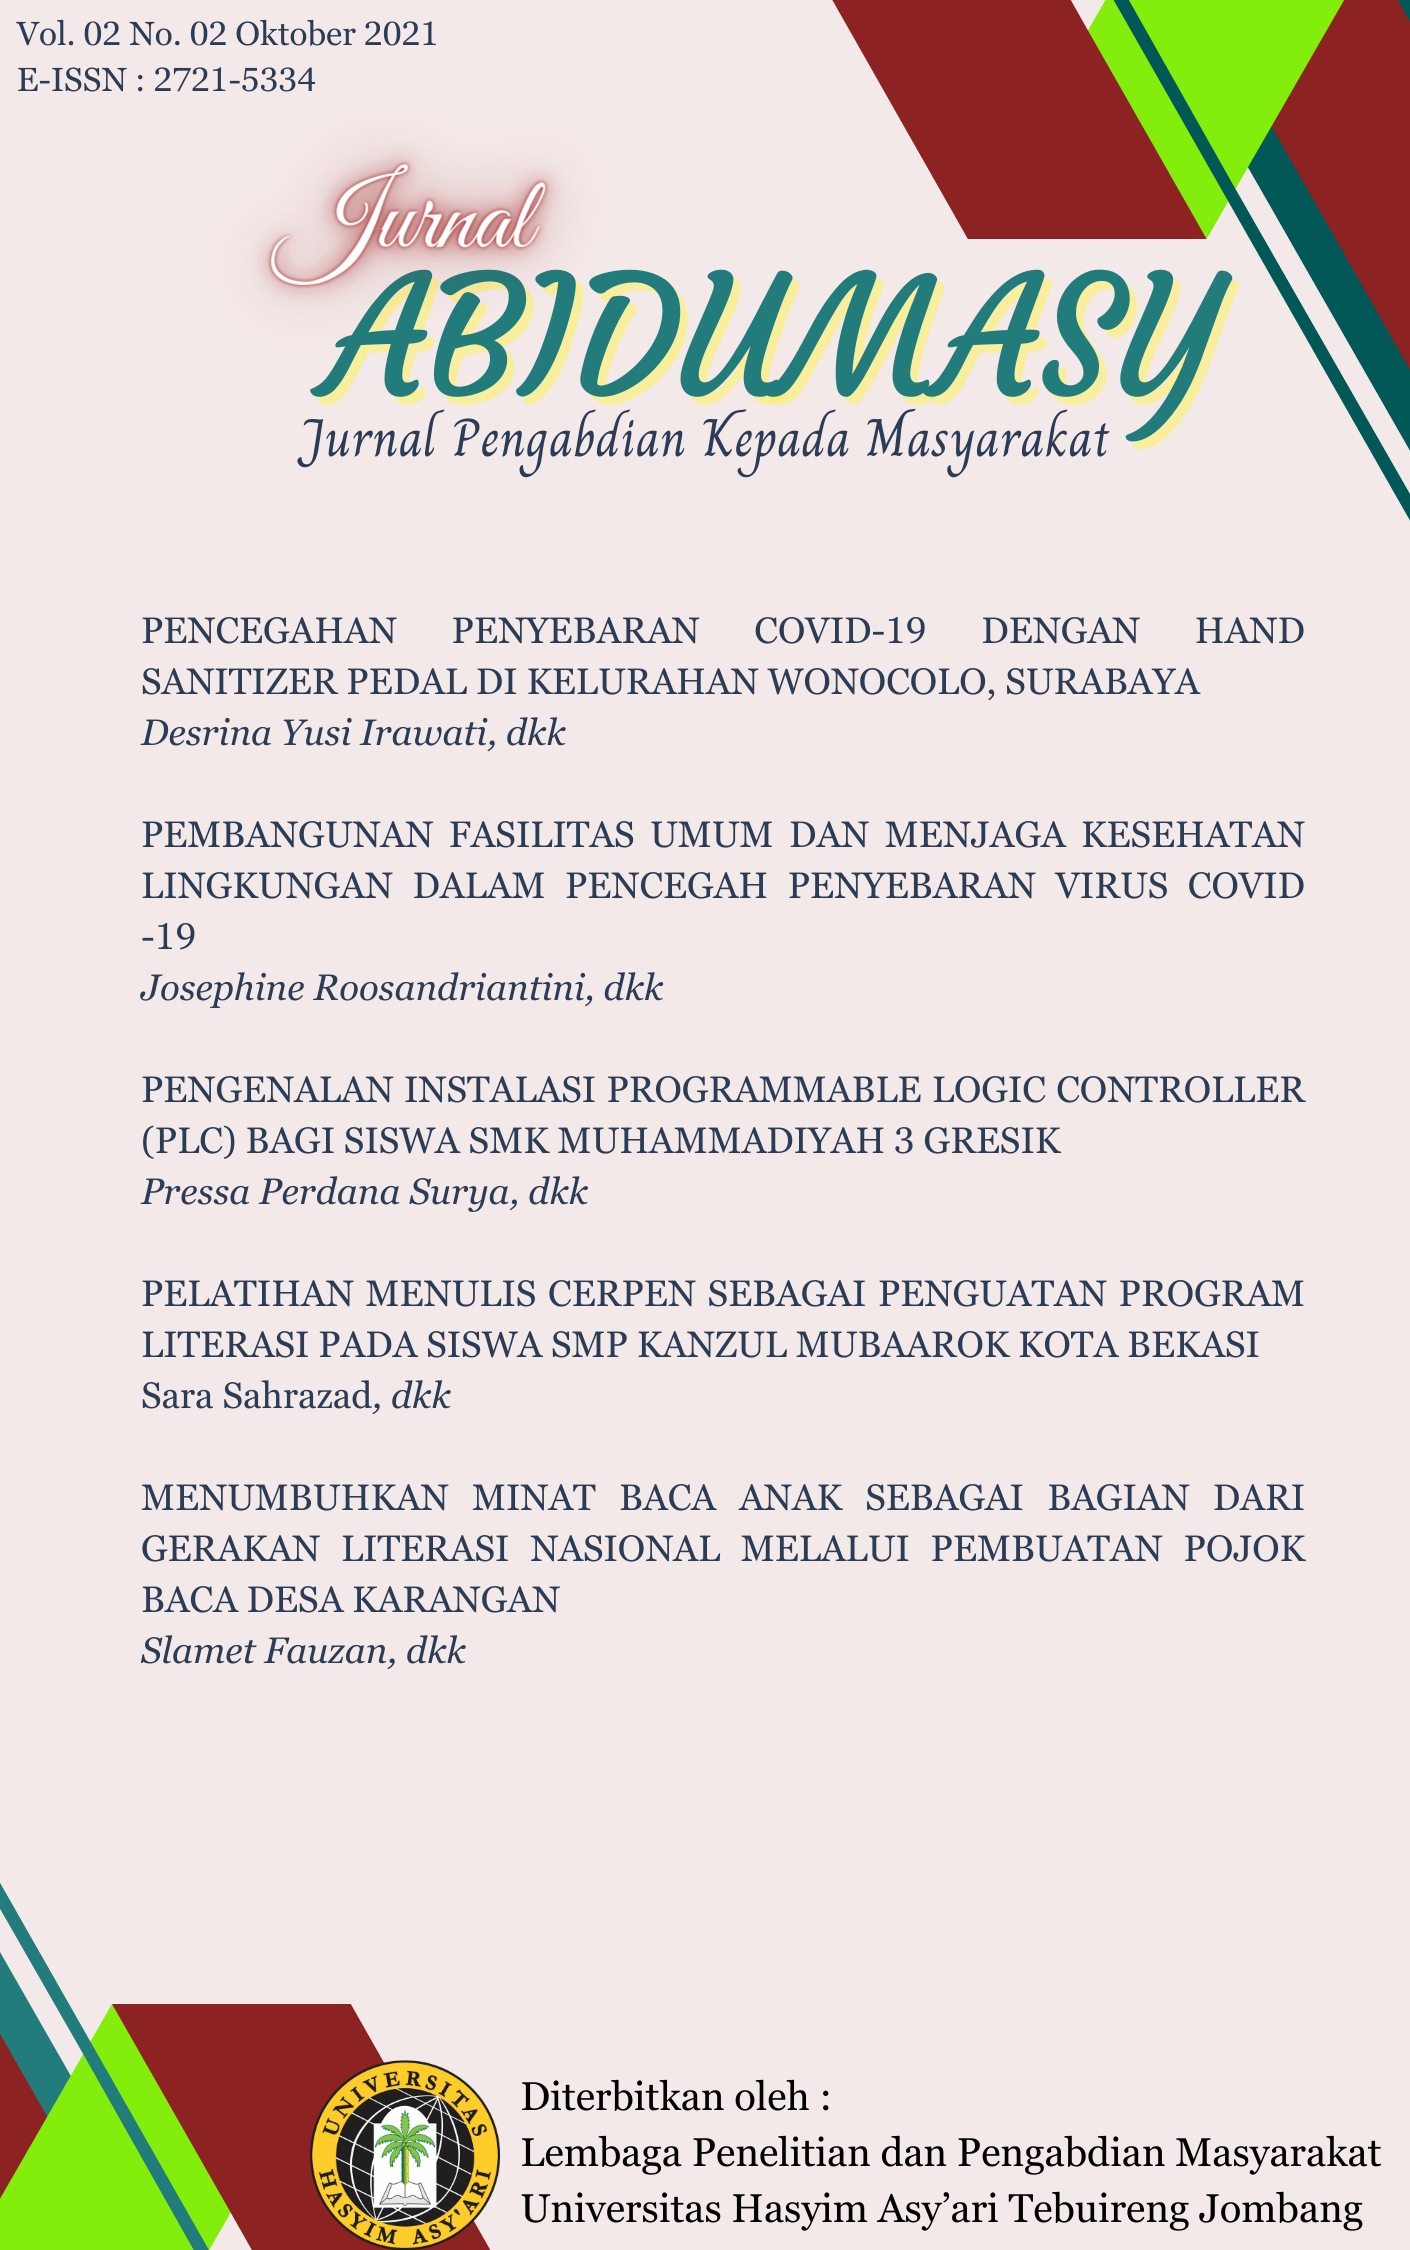 					View Vol. 2 No. 2 (2021): ABIDUMASY : JURNAL PENGABDIAN KEPADA MASYARAKAT
				